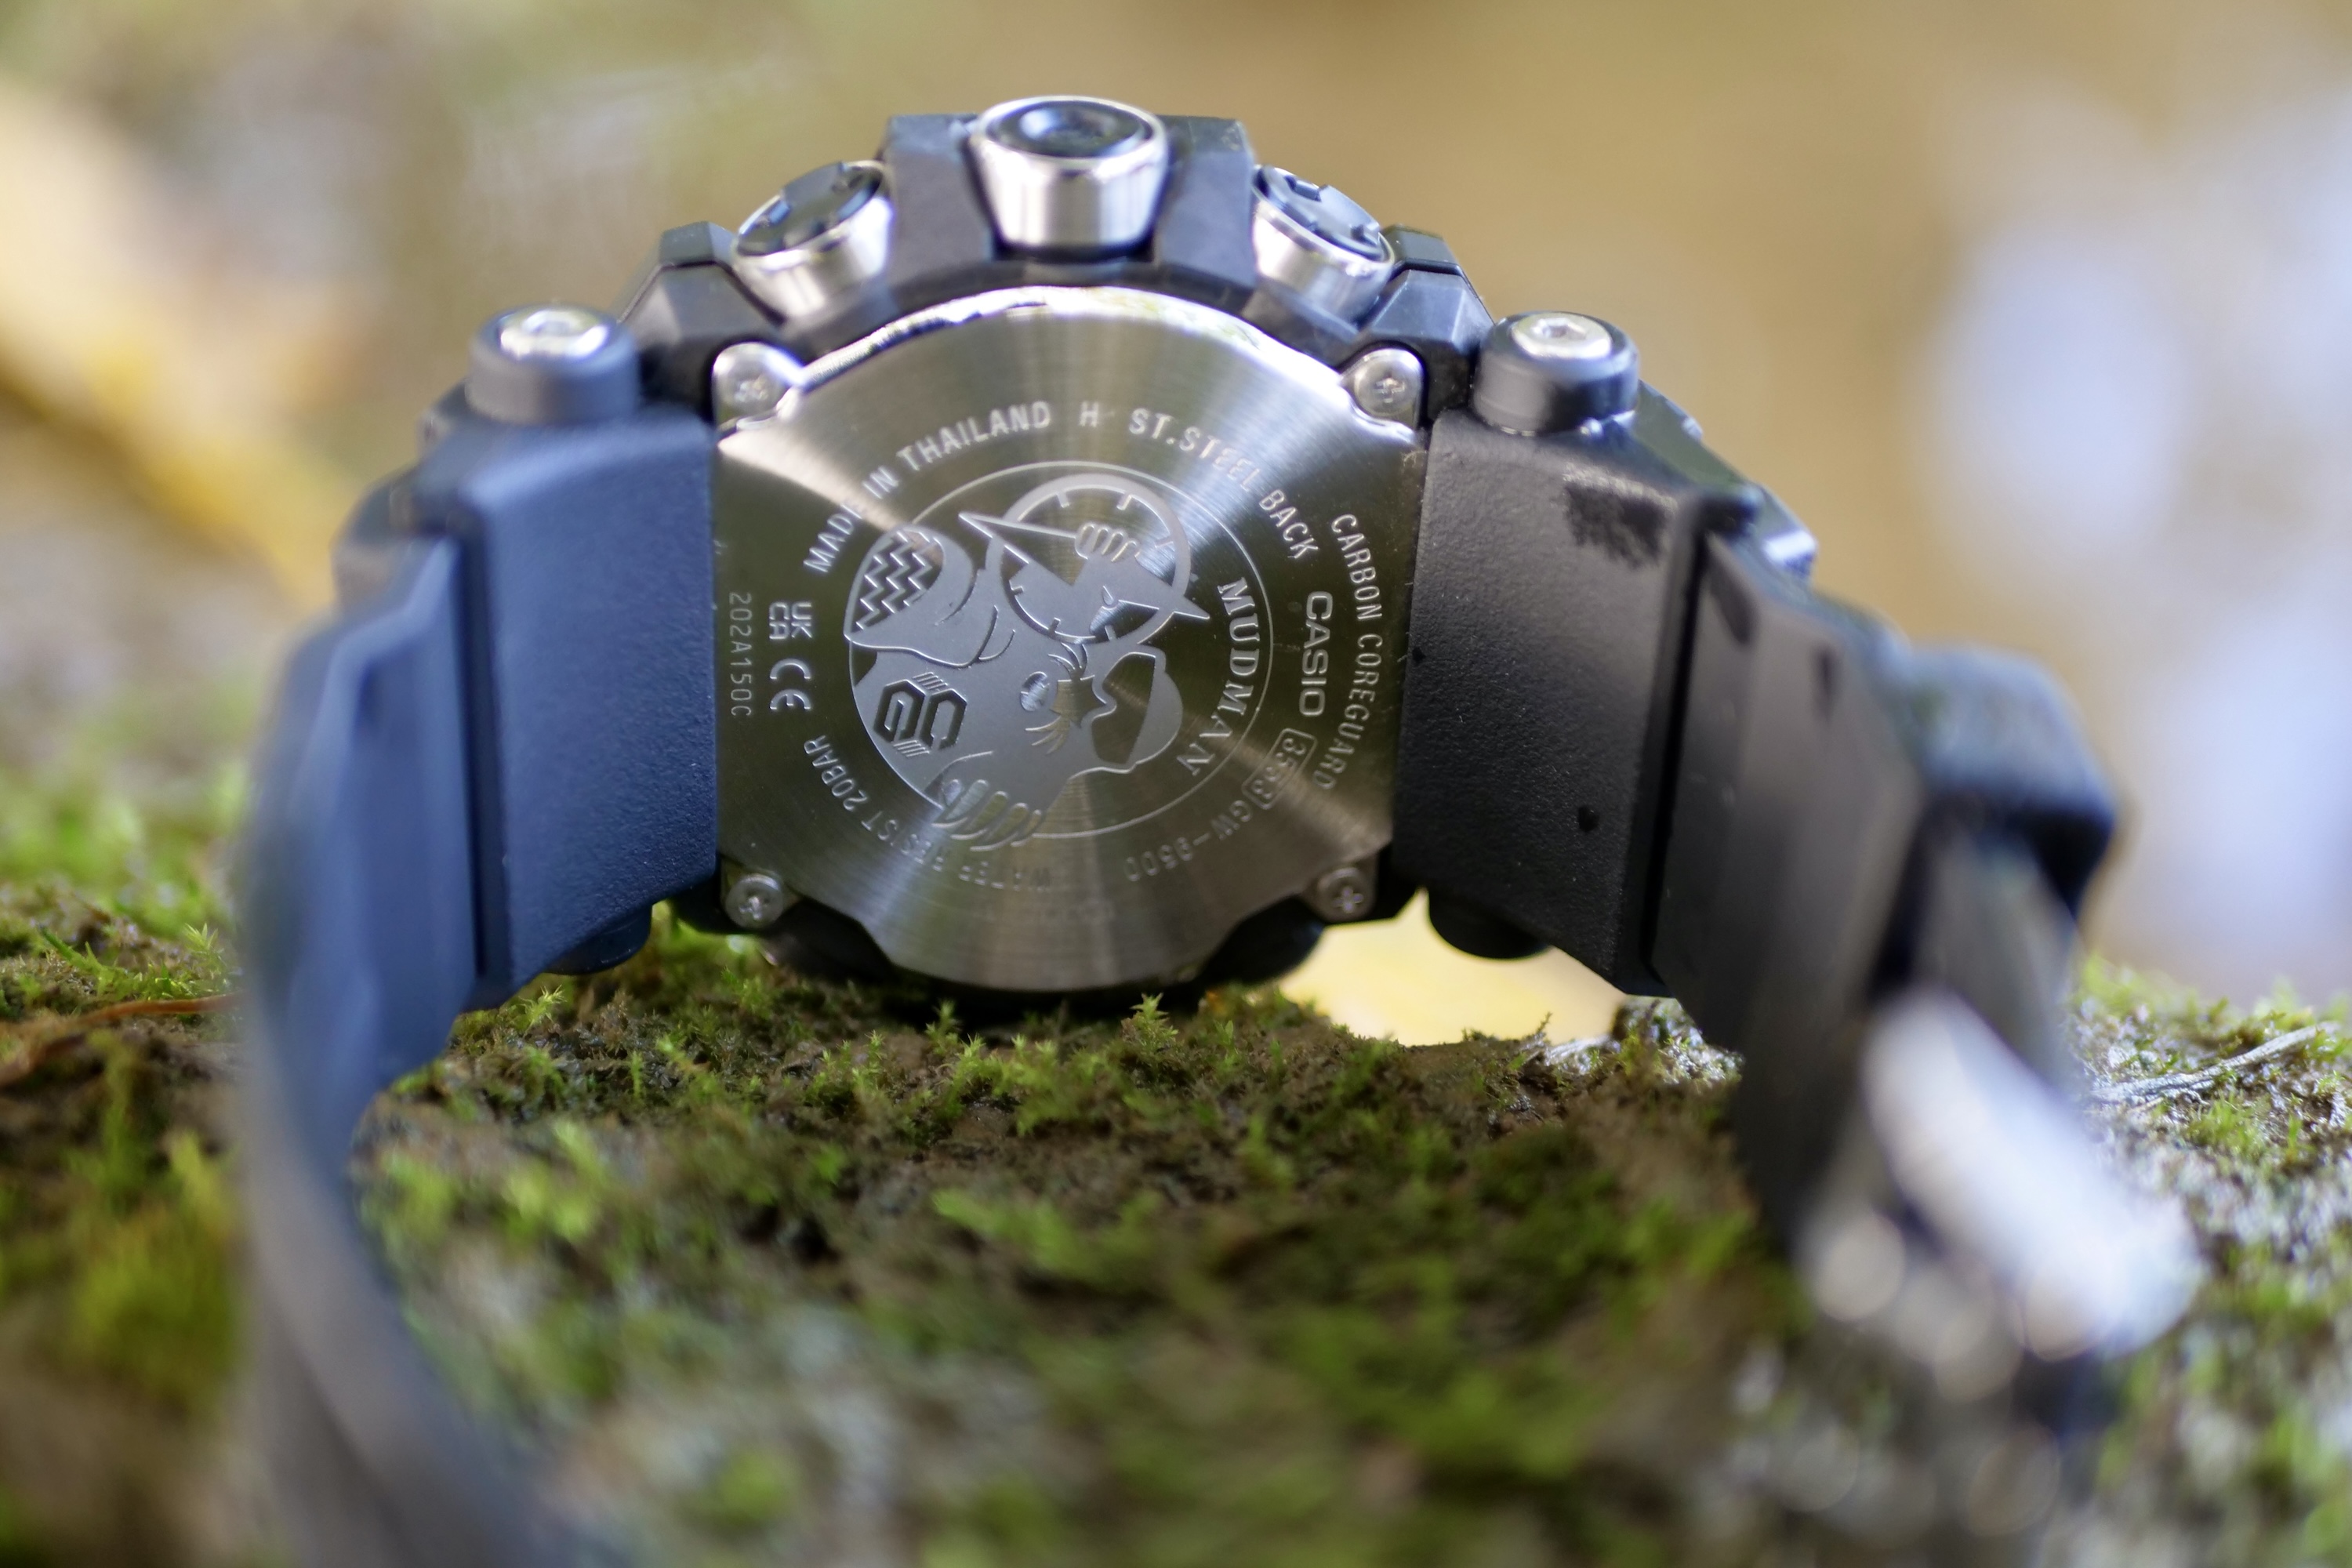 mk66 smart watch waterproof temperature monitoring| Alibaba.com